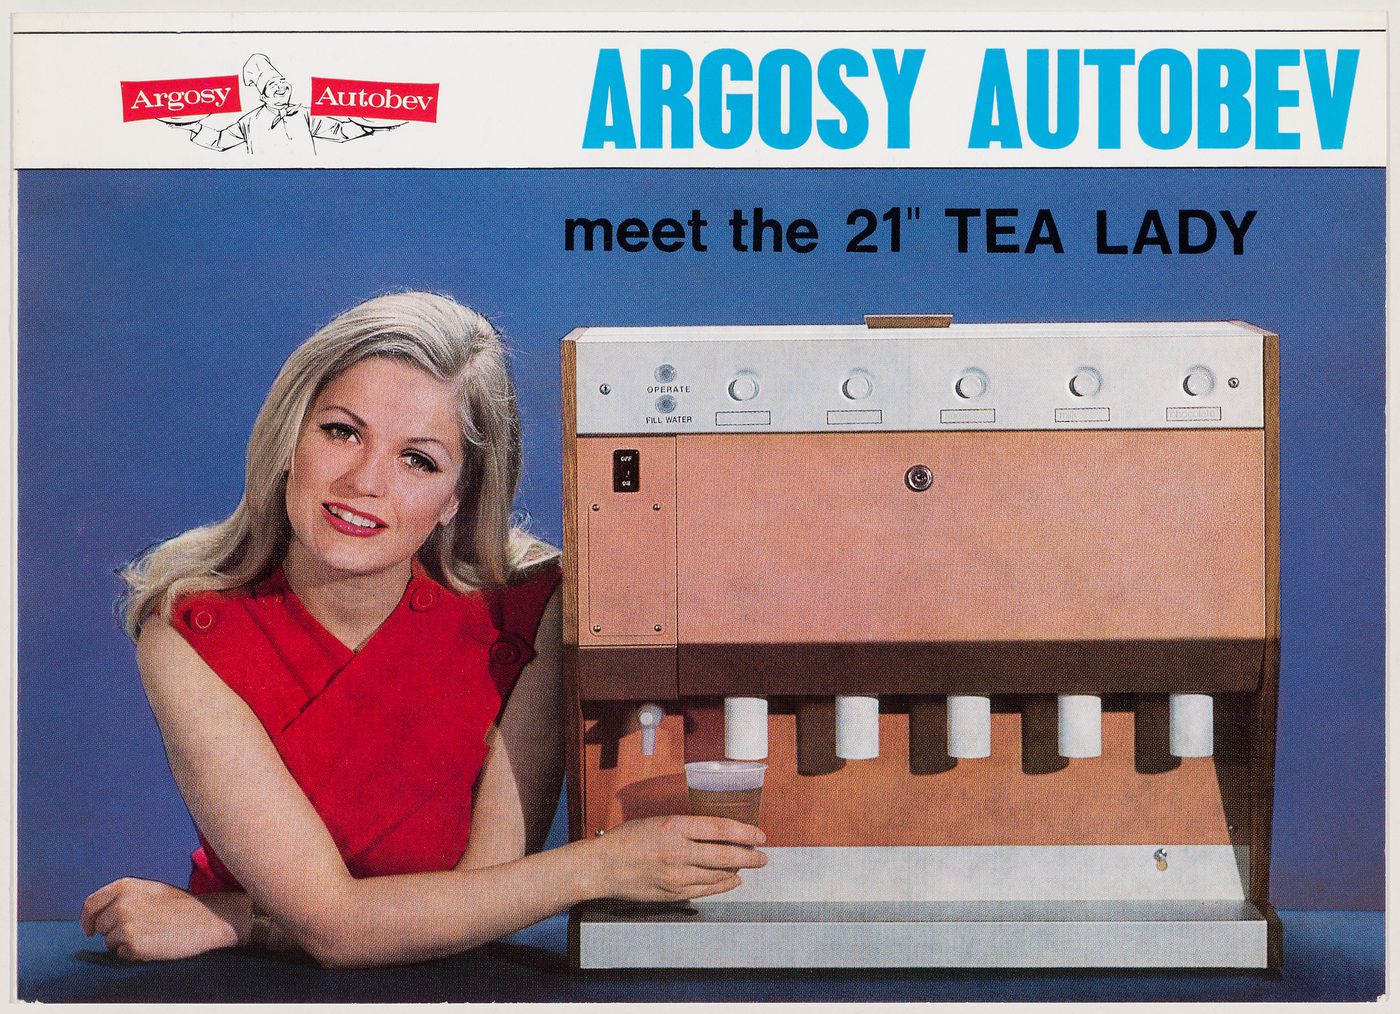 Promotional leaflet for Argosy Autobev beverage dispenser